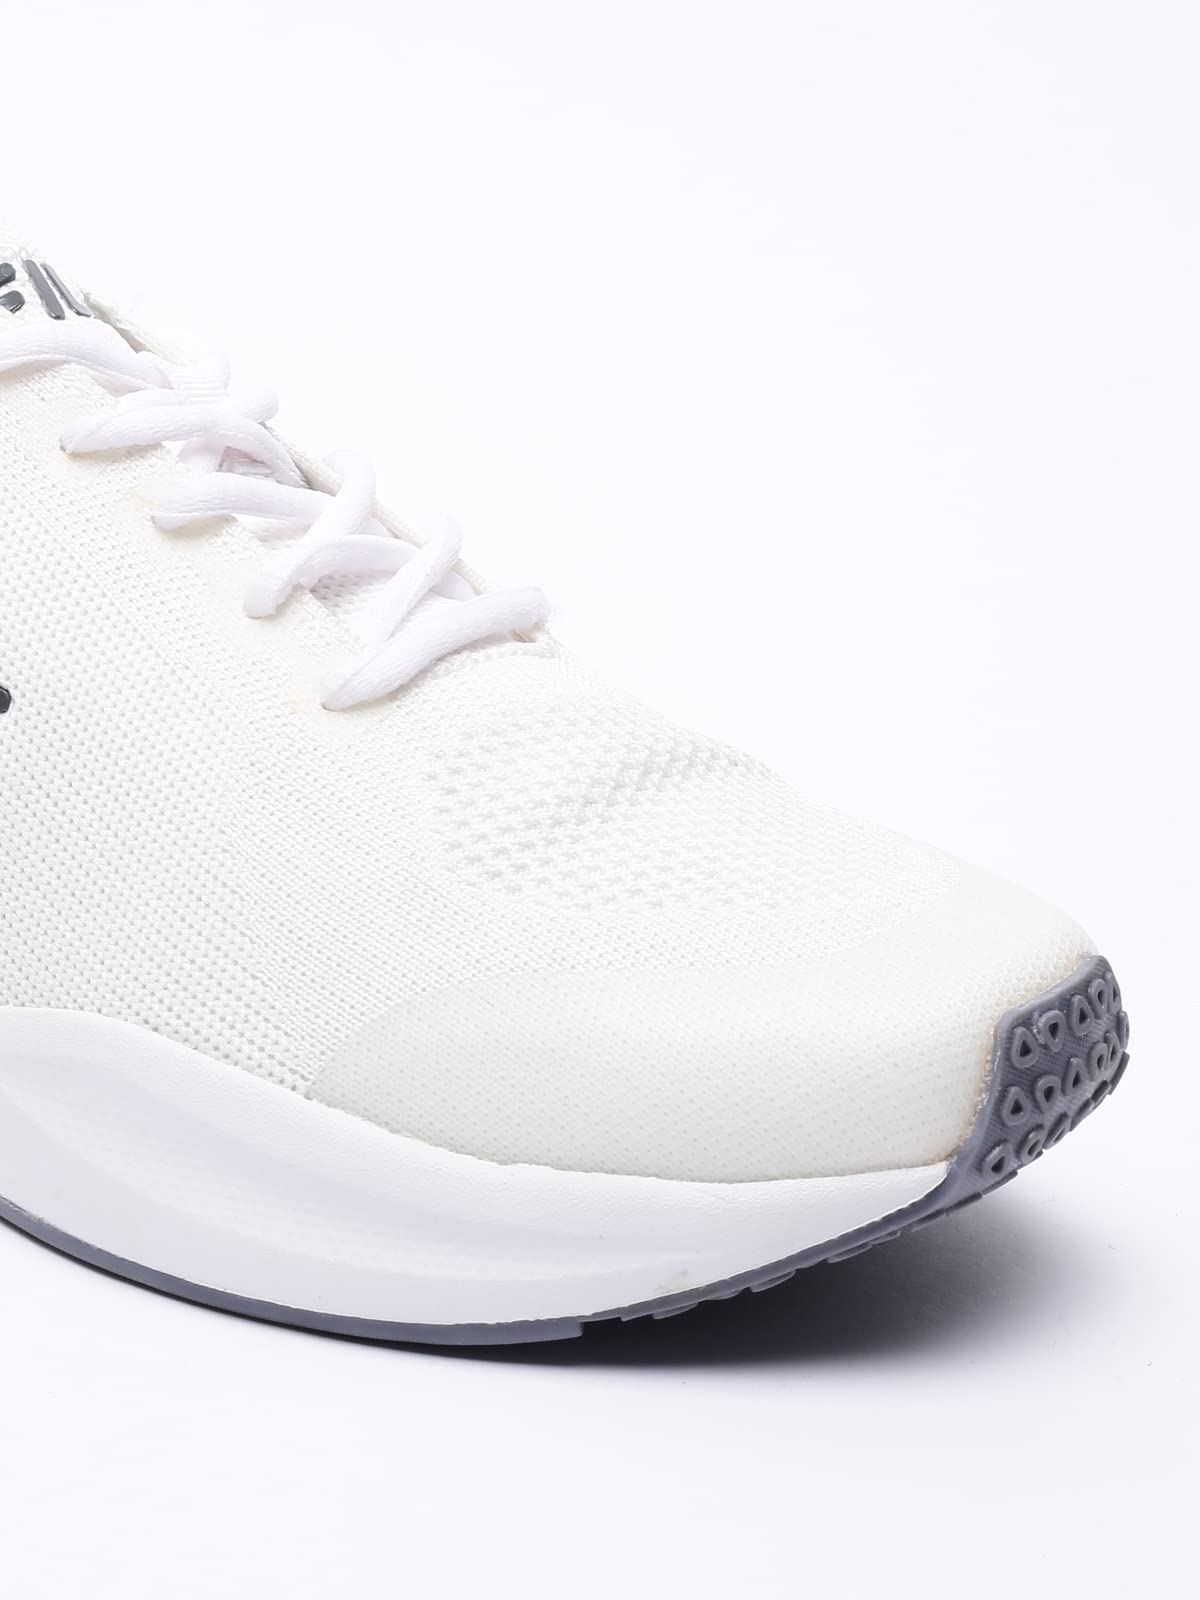 Fila Men's Fizer WHT/C ROC Sneaker (White) 